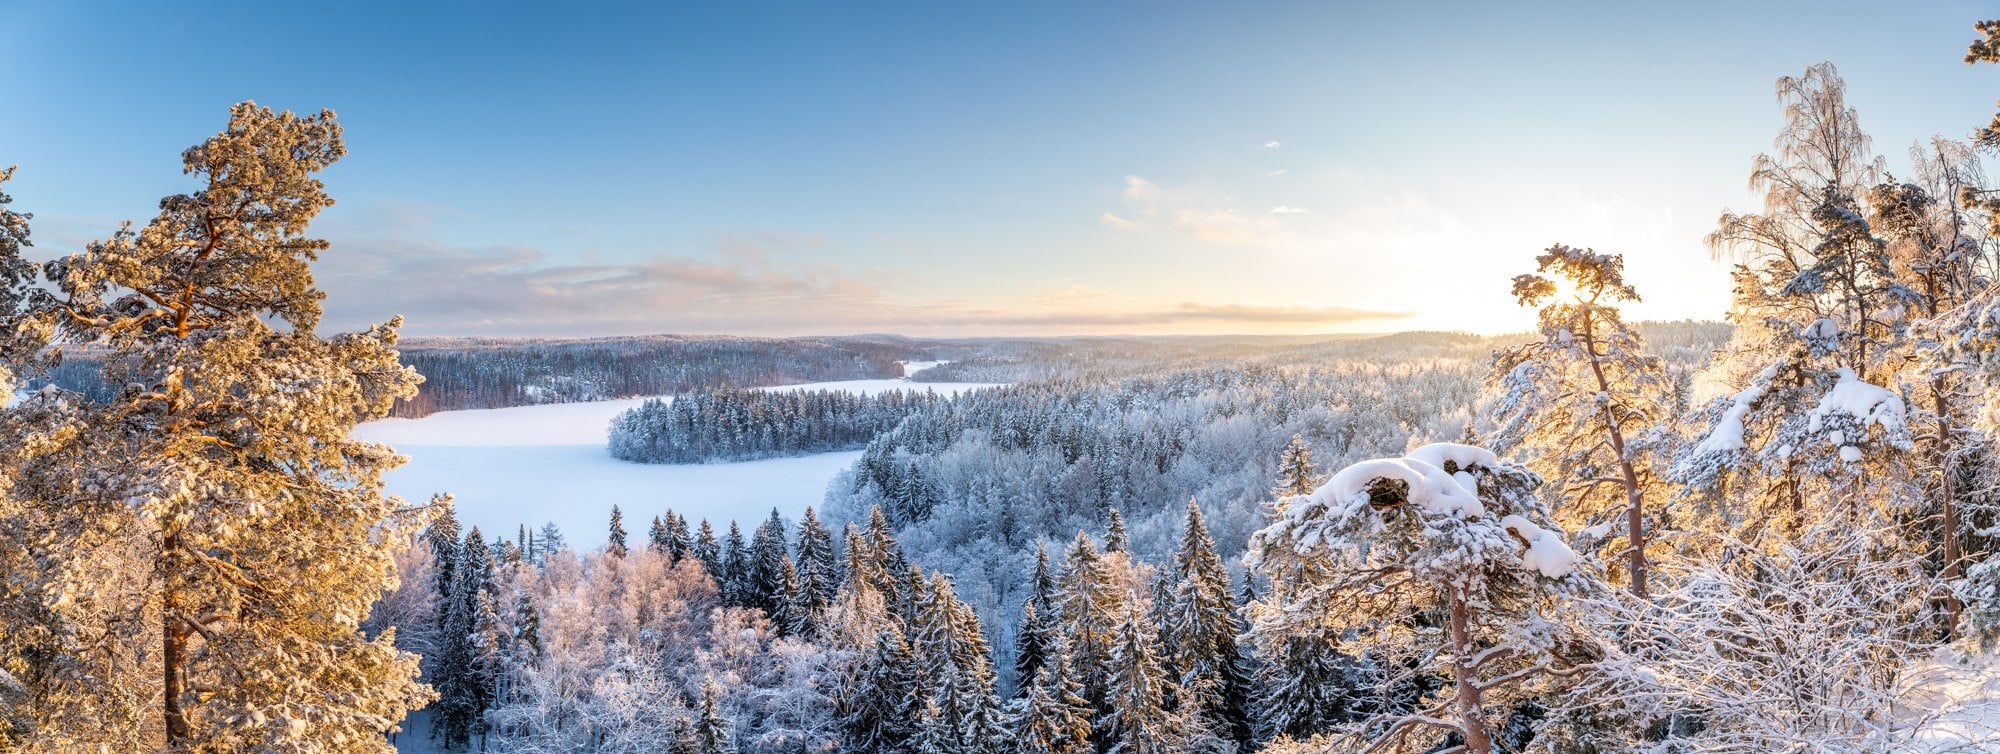 Aulanko scenery in winter